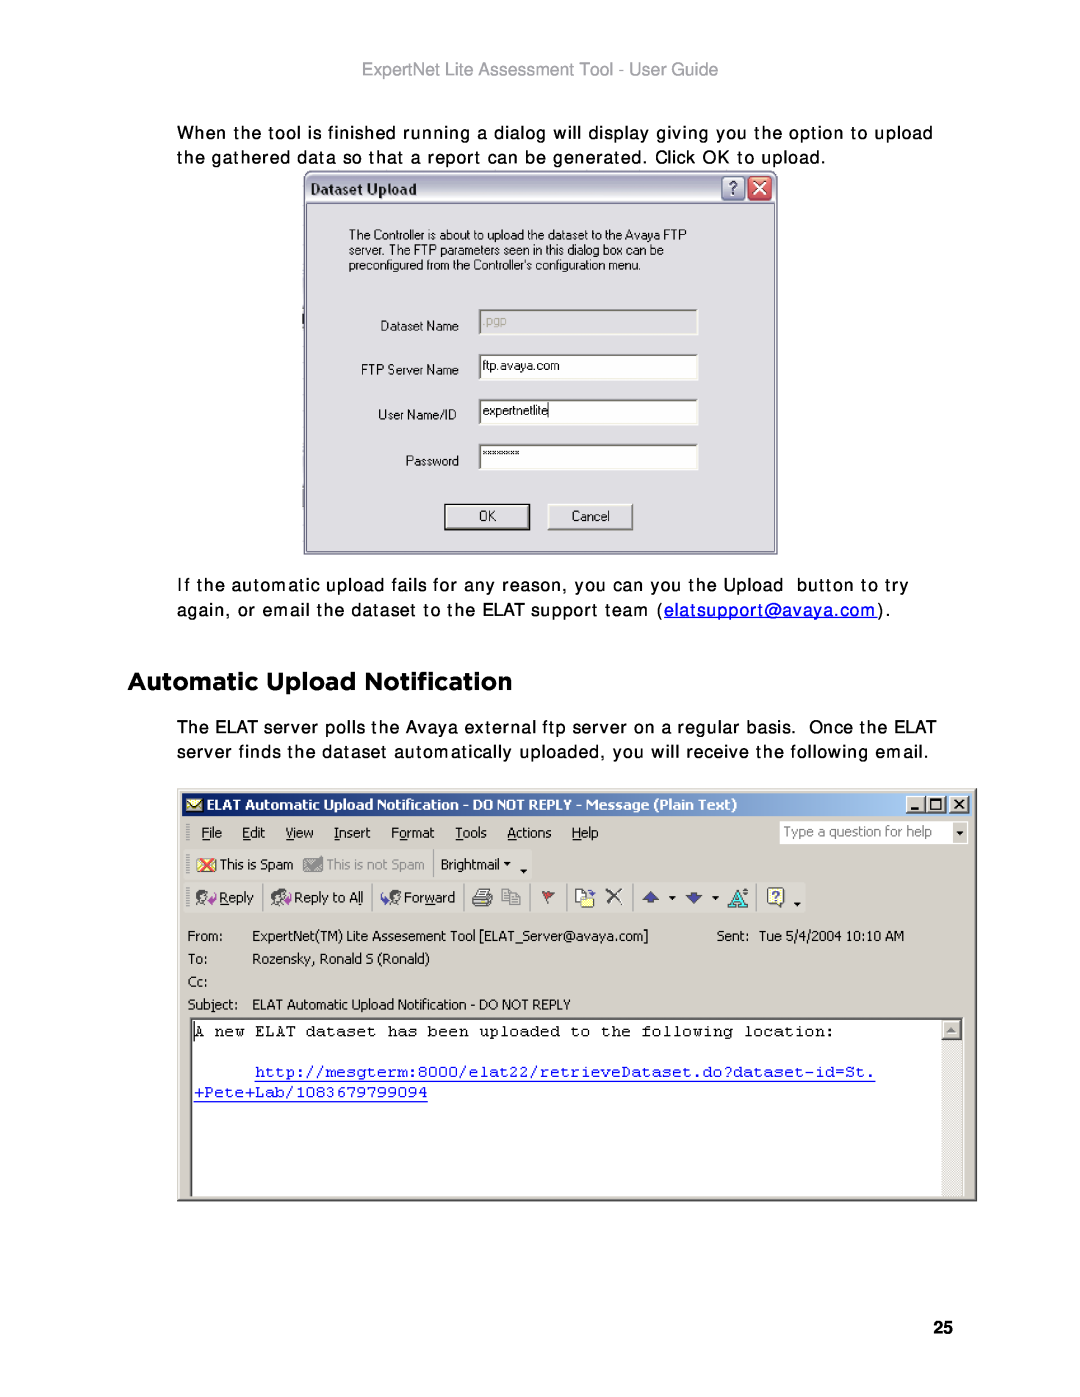 Avaya ELAT manual Automatic Upload Notification, ExpertNet Lite Assessment Tool - User Guide 